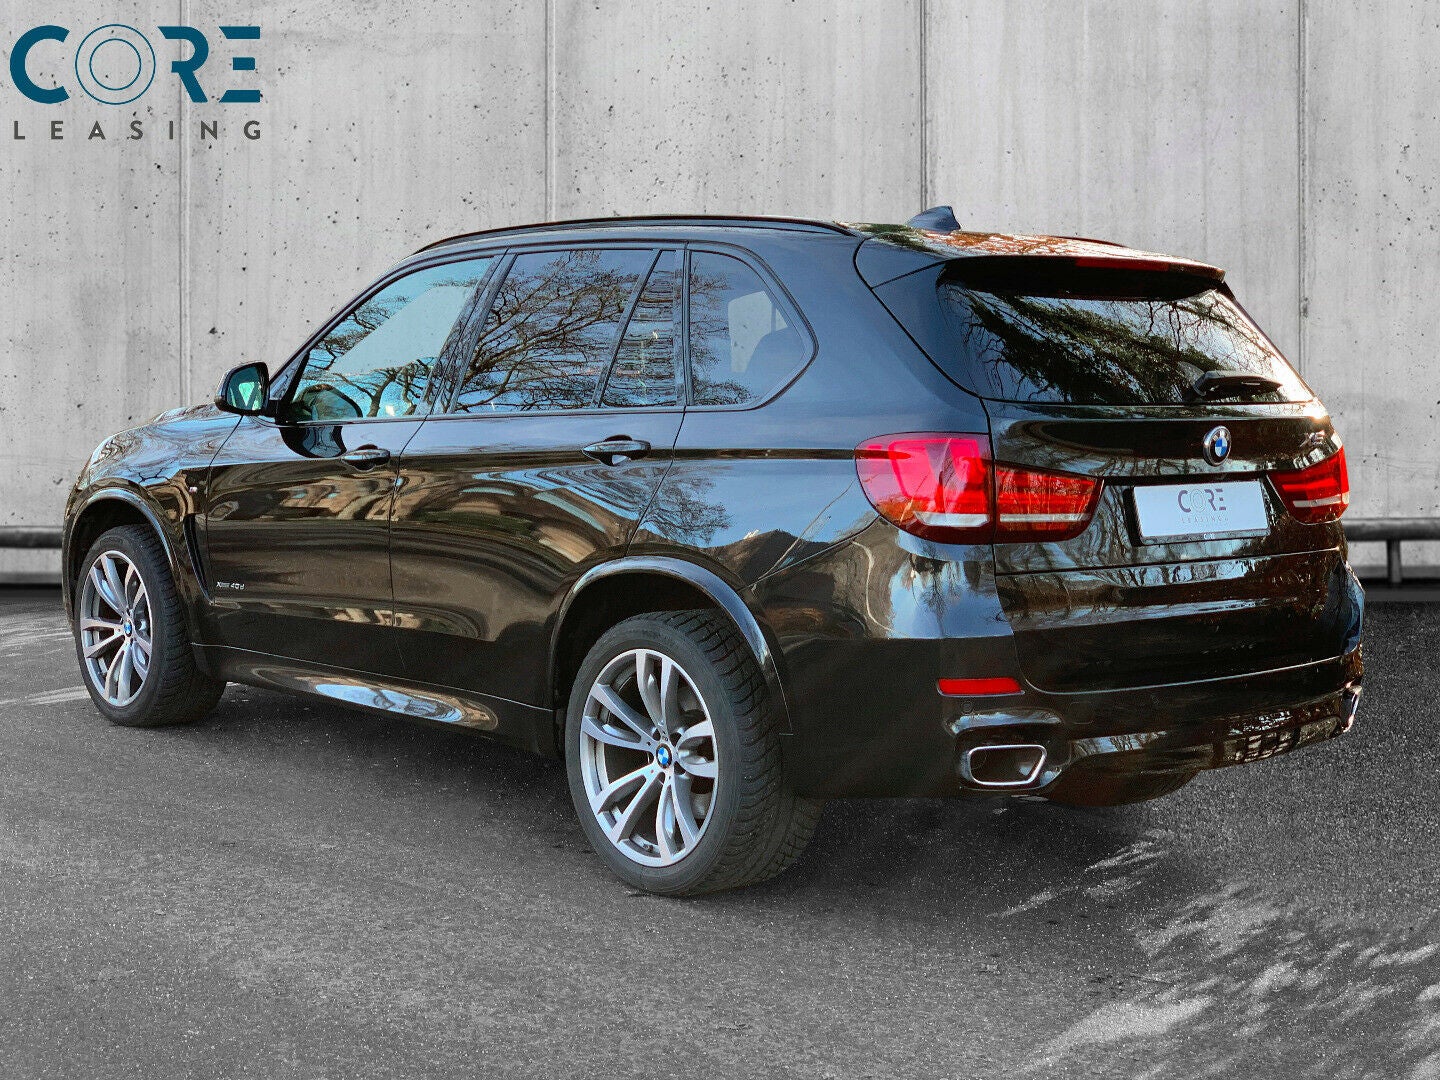 Sortmetal BMW X5 xDrive40d aut. fra 2016 parkeret foran en betonmur. CORE Leasing A/S er eksperter i BMW leasing.